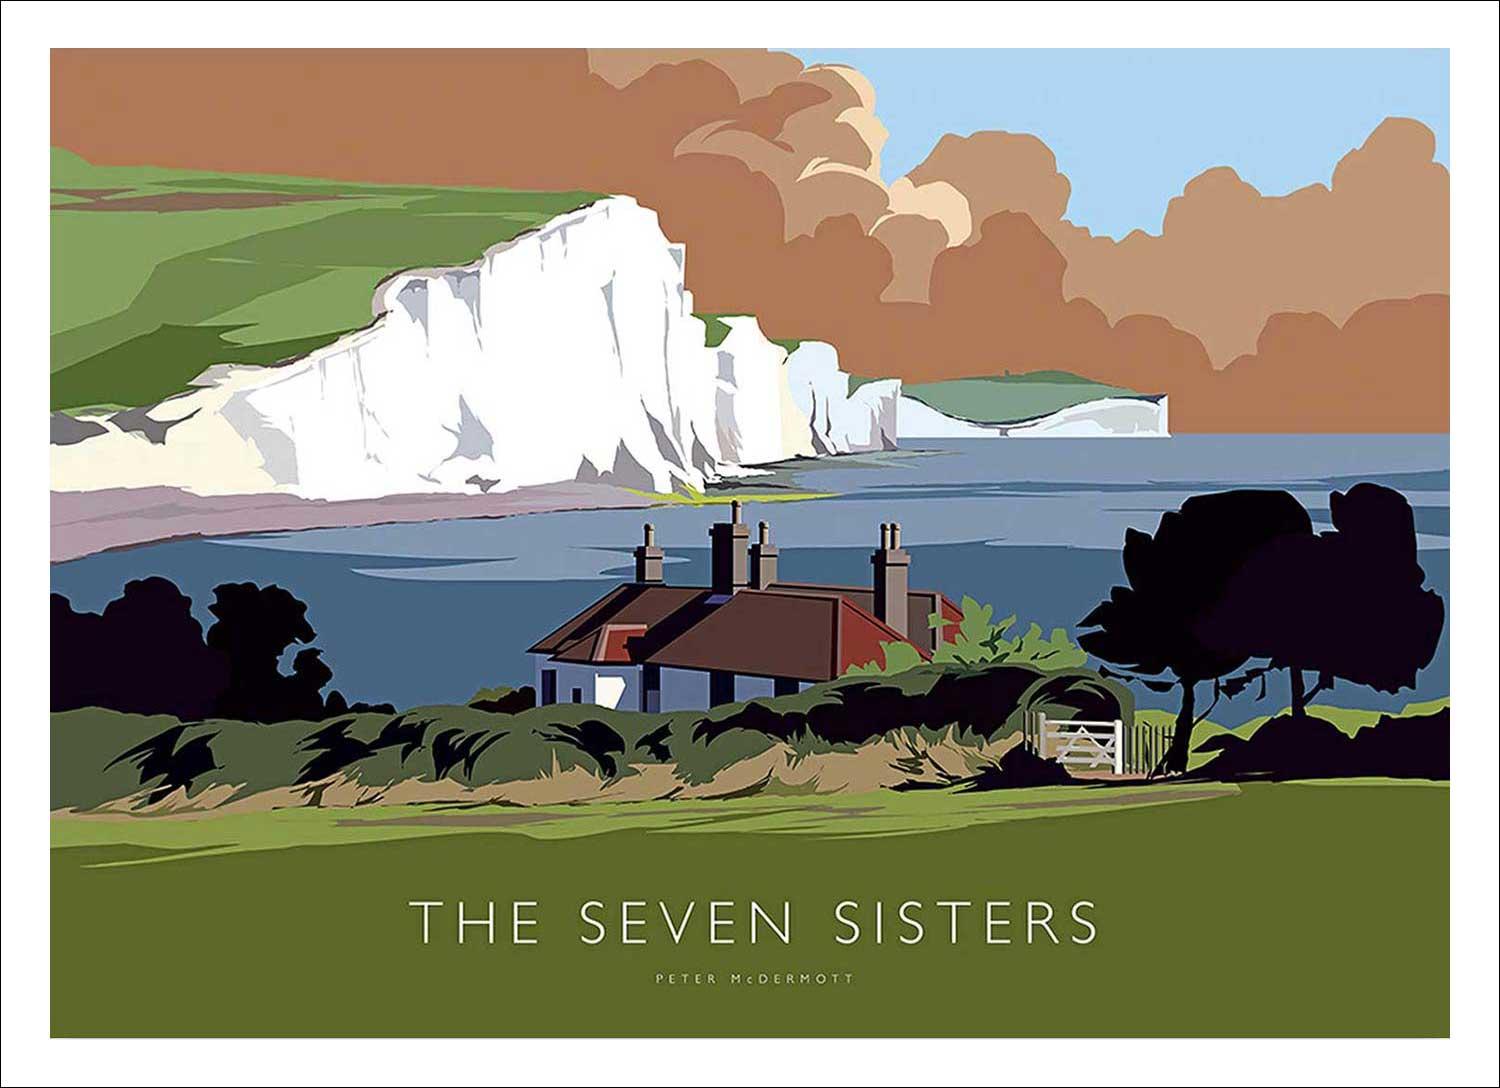 The Seven Sisters Art Print from an original illustration by artist Peter McDermott